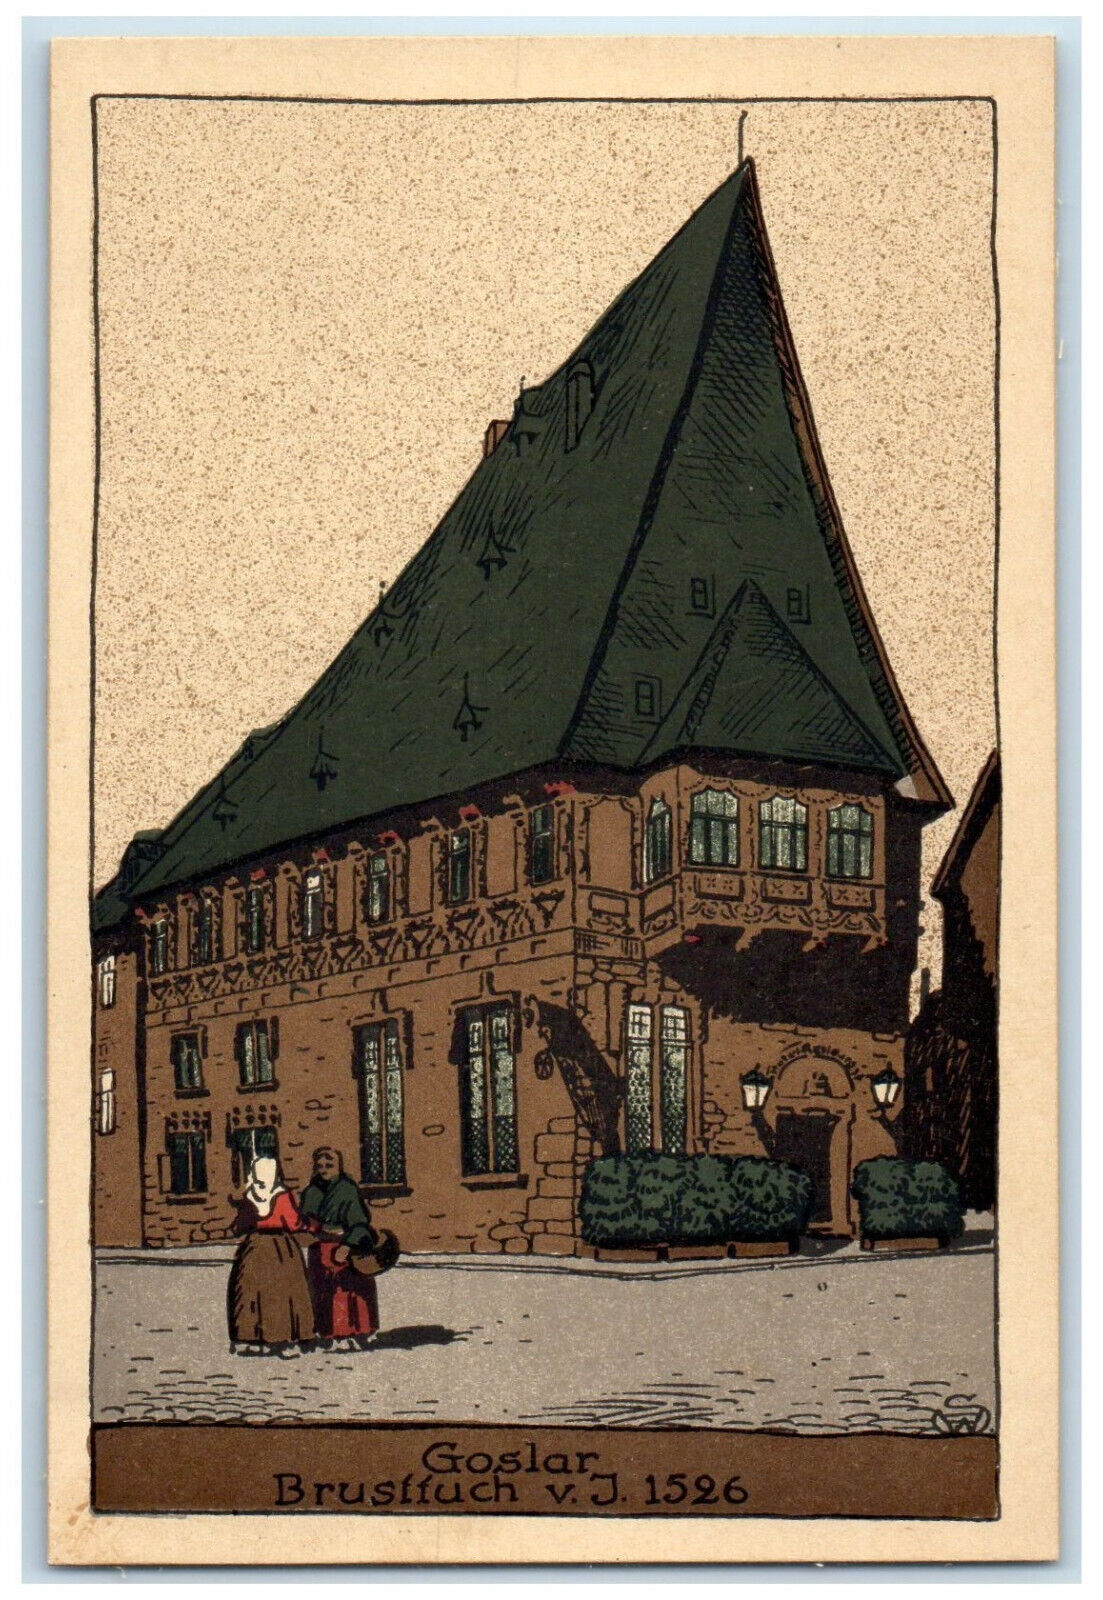 c1940's Two Women Talking Goslar Brusffuch Harz Mountains Germany Postcard